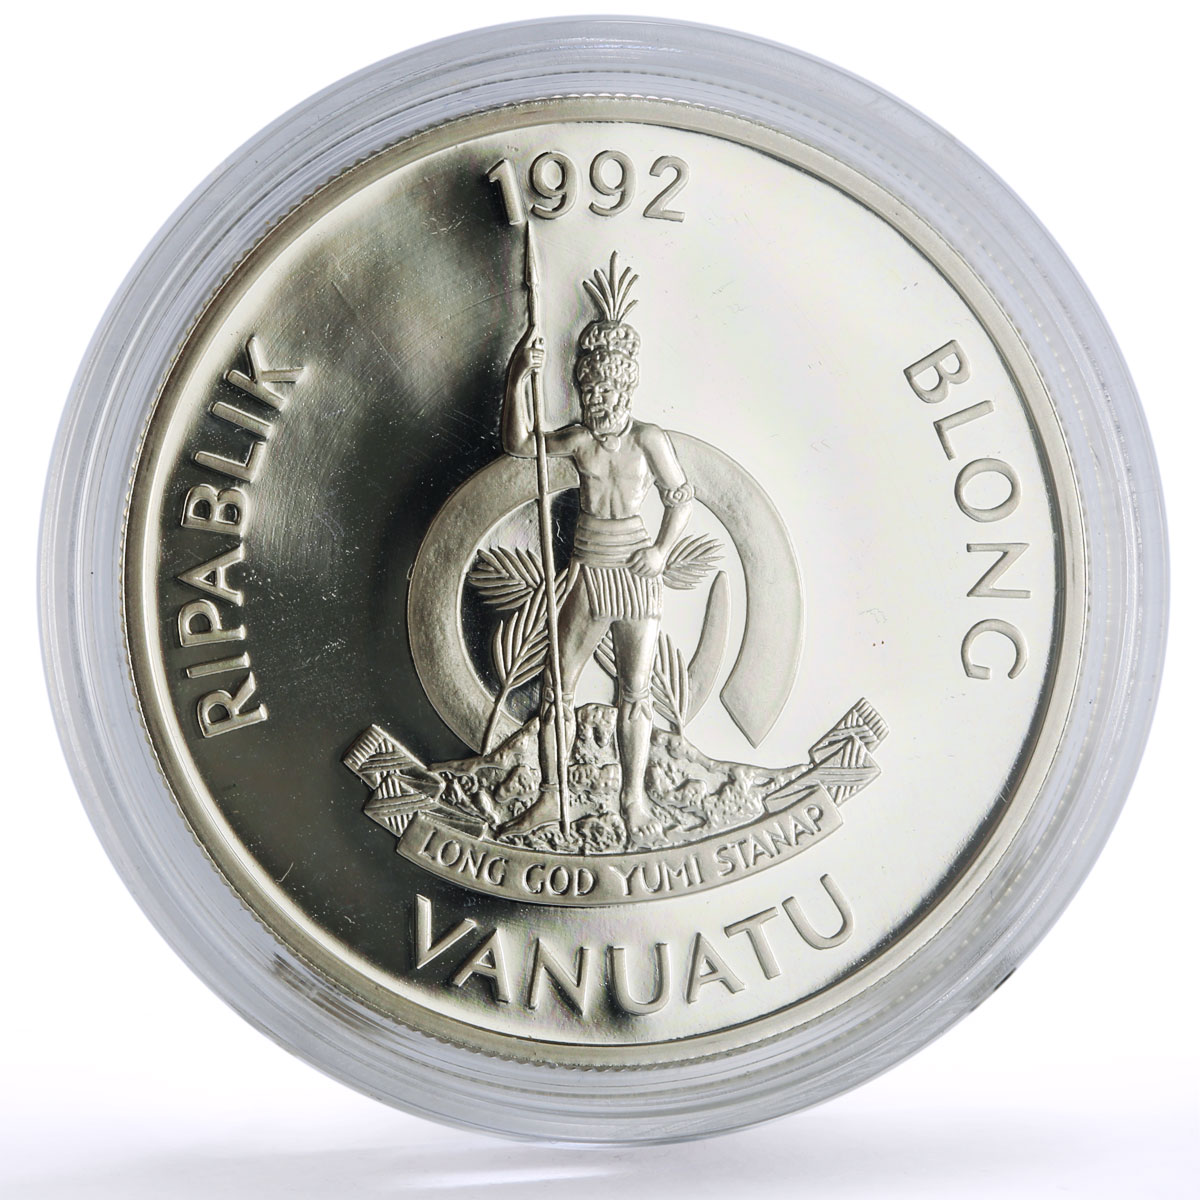 Vanuatu 50 vatu Conservation Wildlife Pigeon Bird Fauna proof silver coin 1992